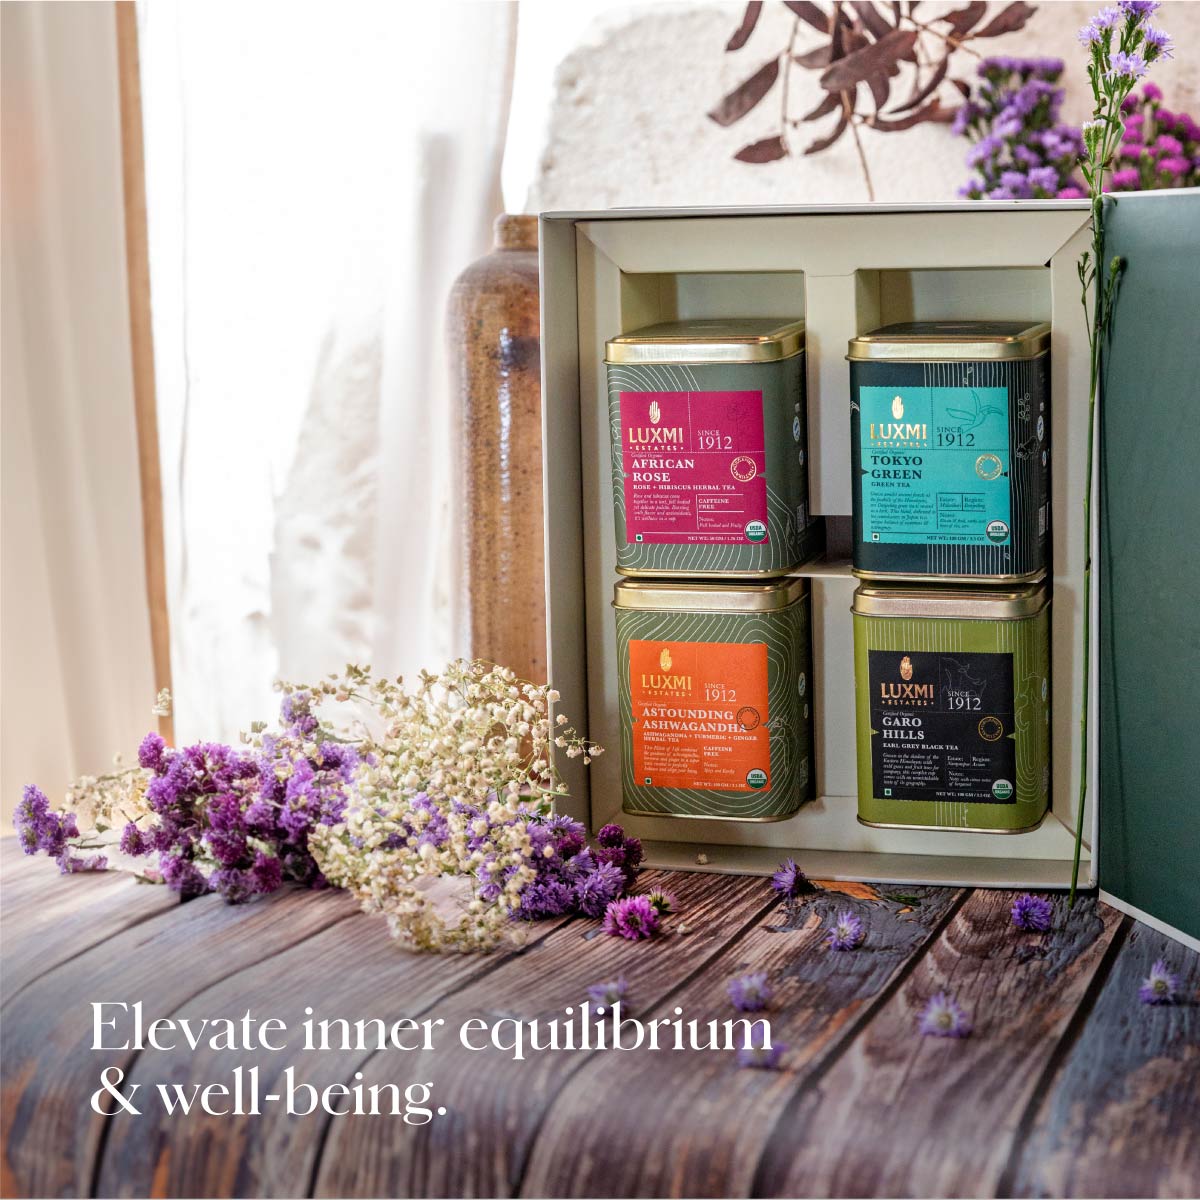 Organic Assorted Variety Tea Gift Set | 2 Herbal Teas, 2 Green Teas 300g | Energy and Balance Gift Box - Luxmi Estates